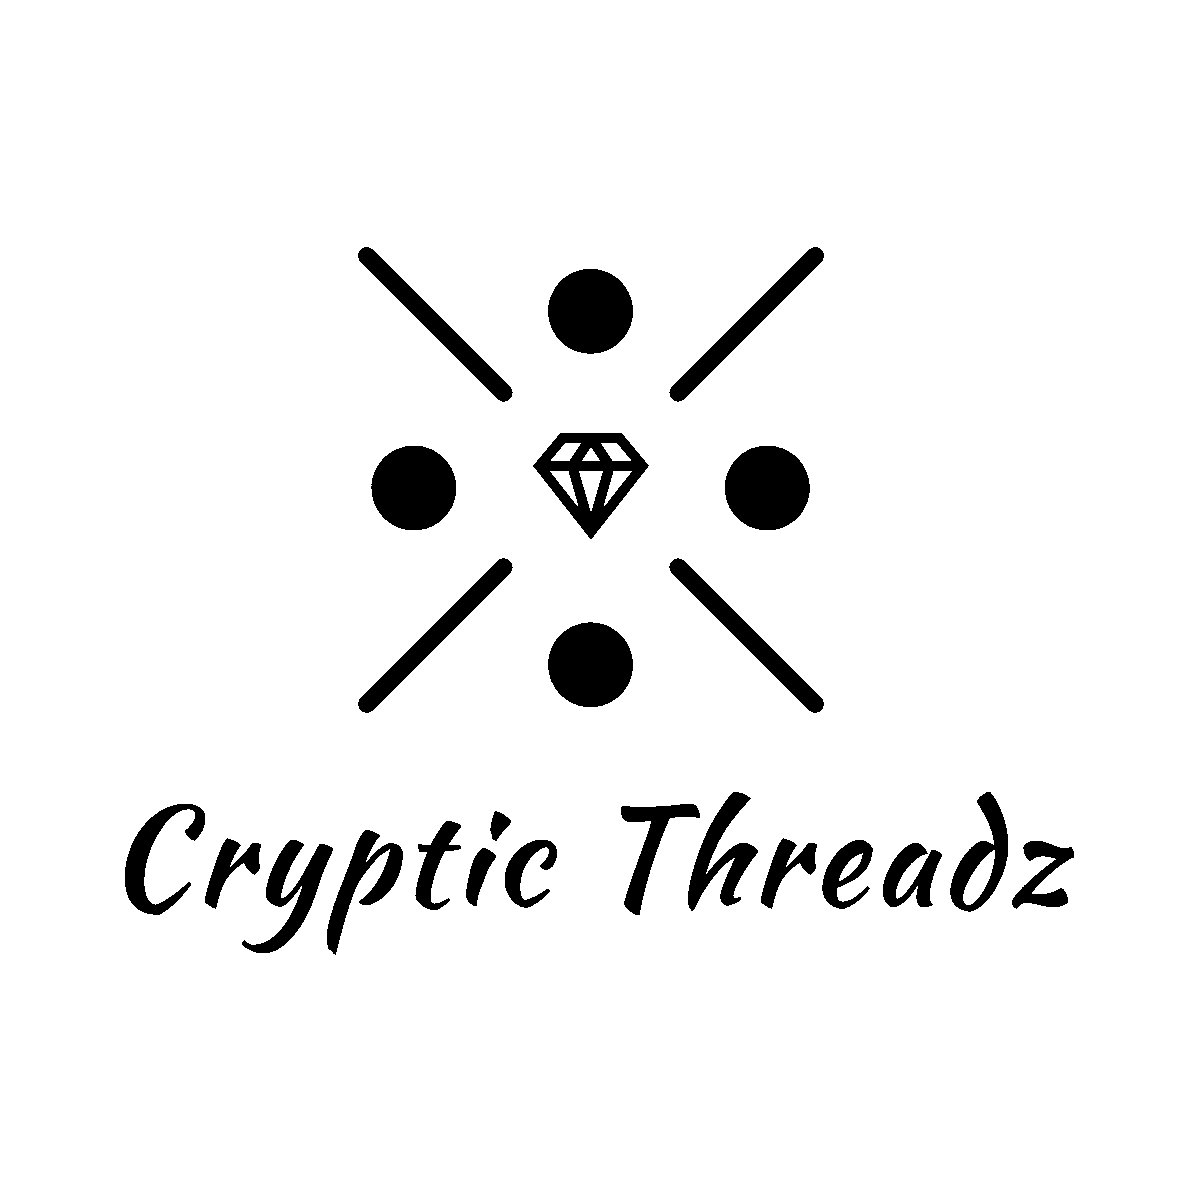 CrypticThreadz